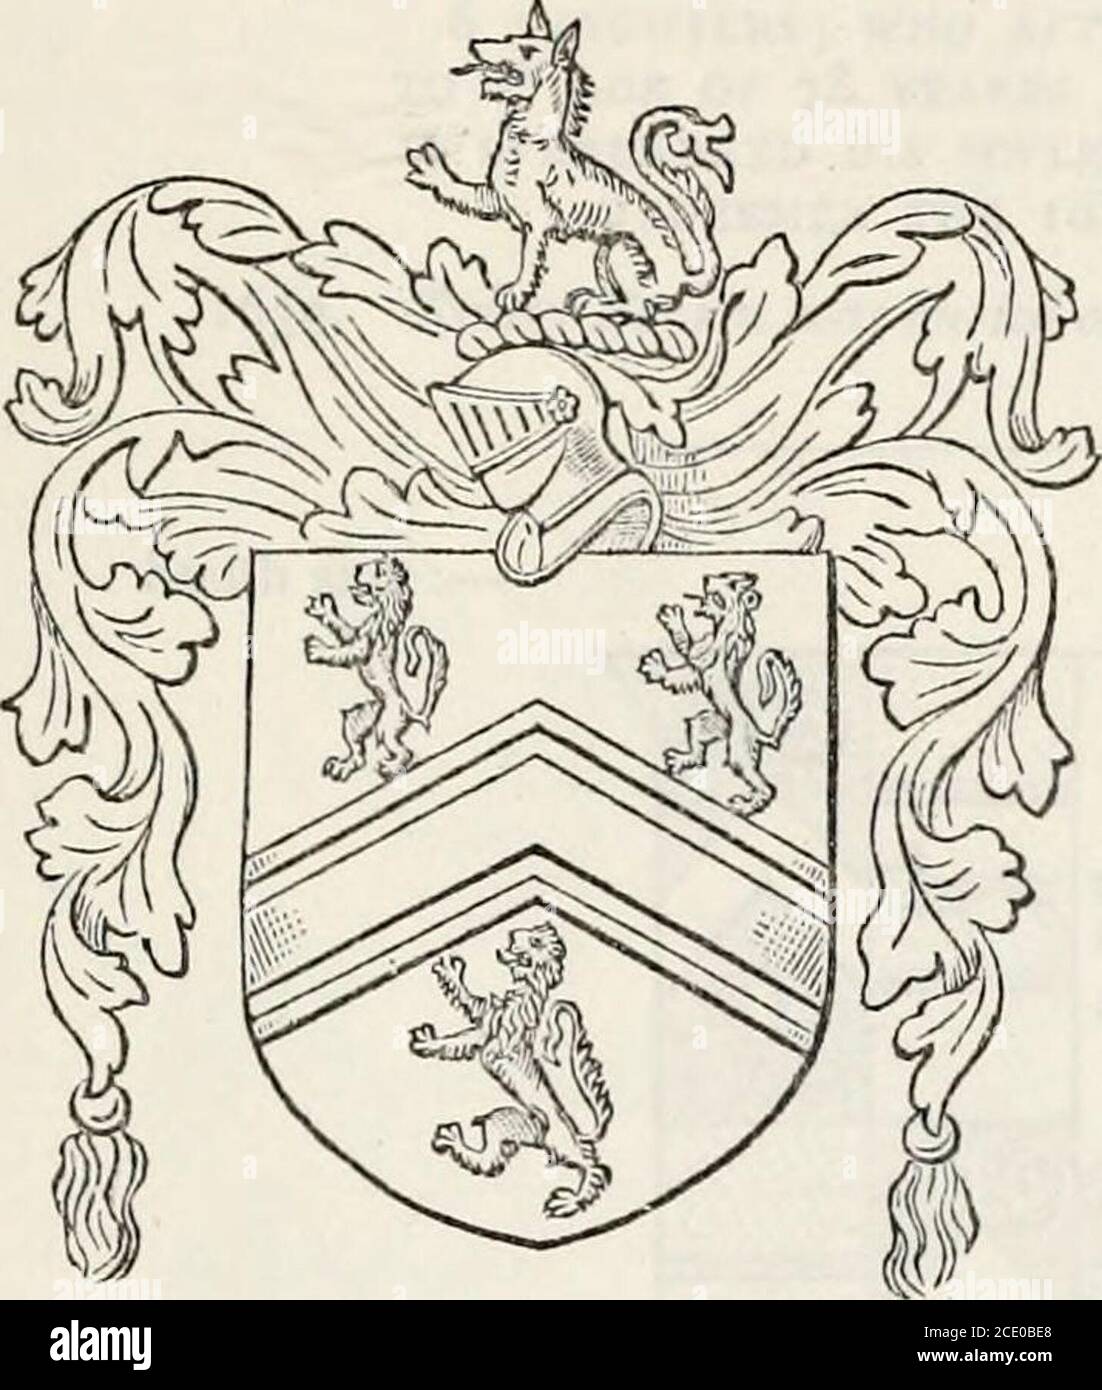 . Sepulchral memorials of Bobbingworth, Essex; with genealogical notes and pedigrees . INGWORTH, ESSEX. f E BobbingAvorth, Eng. {Parish) 9104 Sopiilrhral iiioiiiorials of Bobbingwoiili, Essex. With 2 iroiioalogical notes and pedi.^jrees. [London] Priv. print, for l/. Crls]i. ISSS. 4 p 1 , (A p. ilUis., 2 pi. fcnats of arms) fold, gcneal. tab. 29r- liUc.ka CM . , n^, One luHilrr-.l copies only of tlii.? vol. ... have been printed, llus copy is no. 27. Vrl l.v Ircd A. Crisp (,cnr.unii-.il table; Oliver pcrliL,rce. ? cwiurCARD Co&gt;:n;.-.Ts.—Mnnimir!U.-,l inscripti.^ns, etc.—Rectors of Bobbing Stock Photo